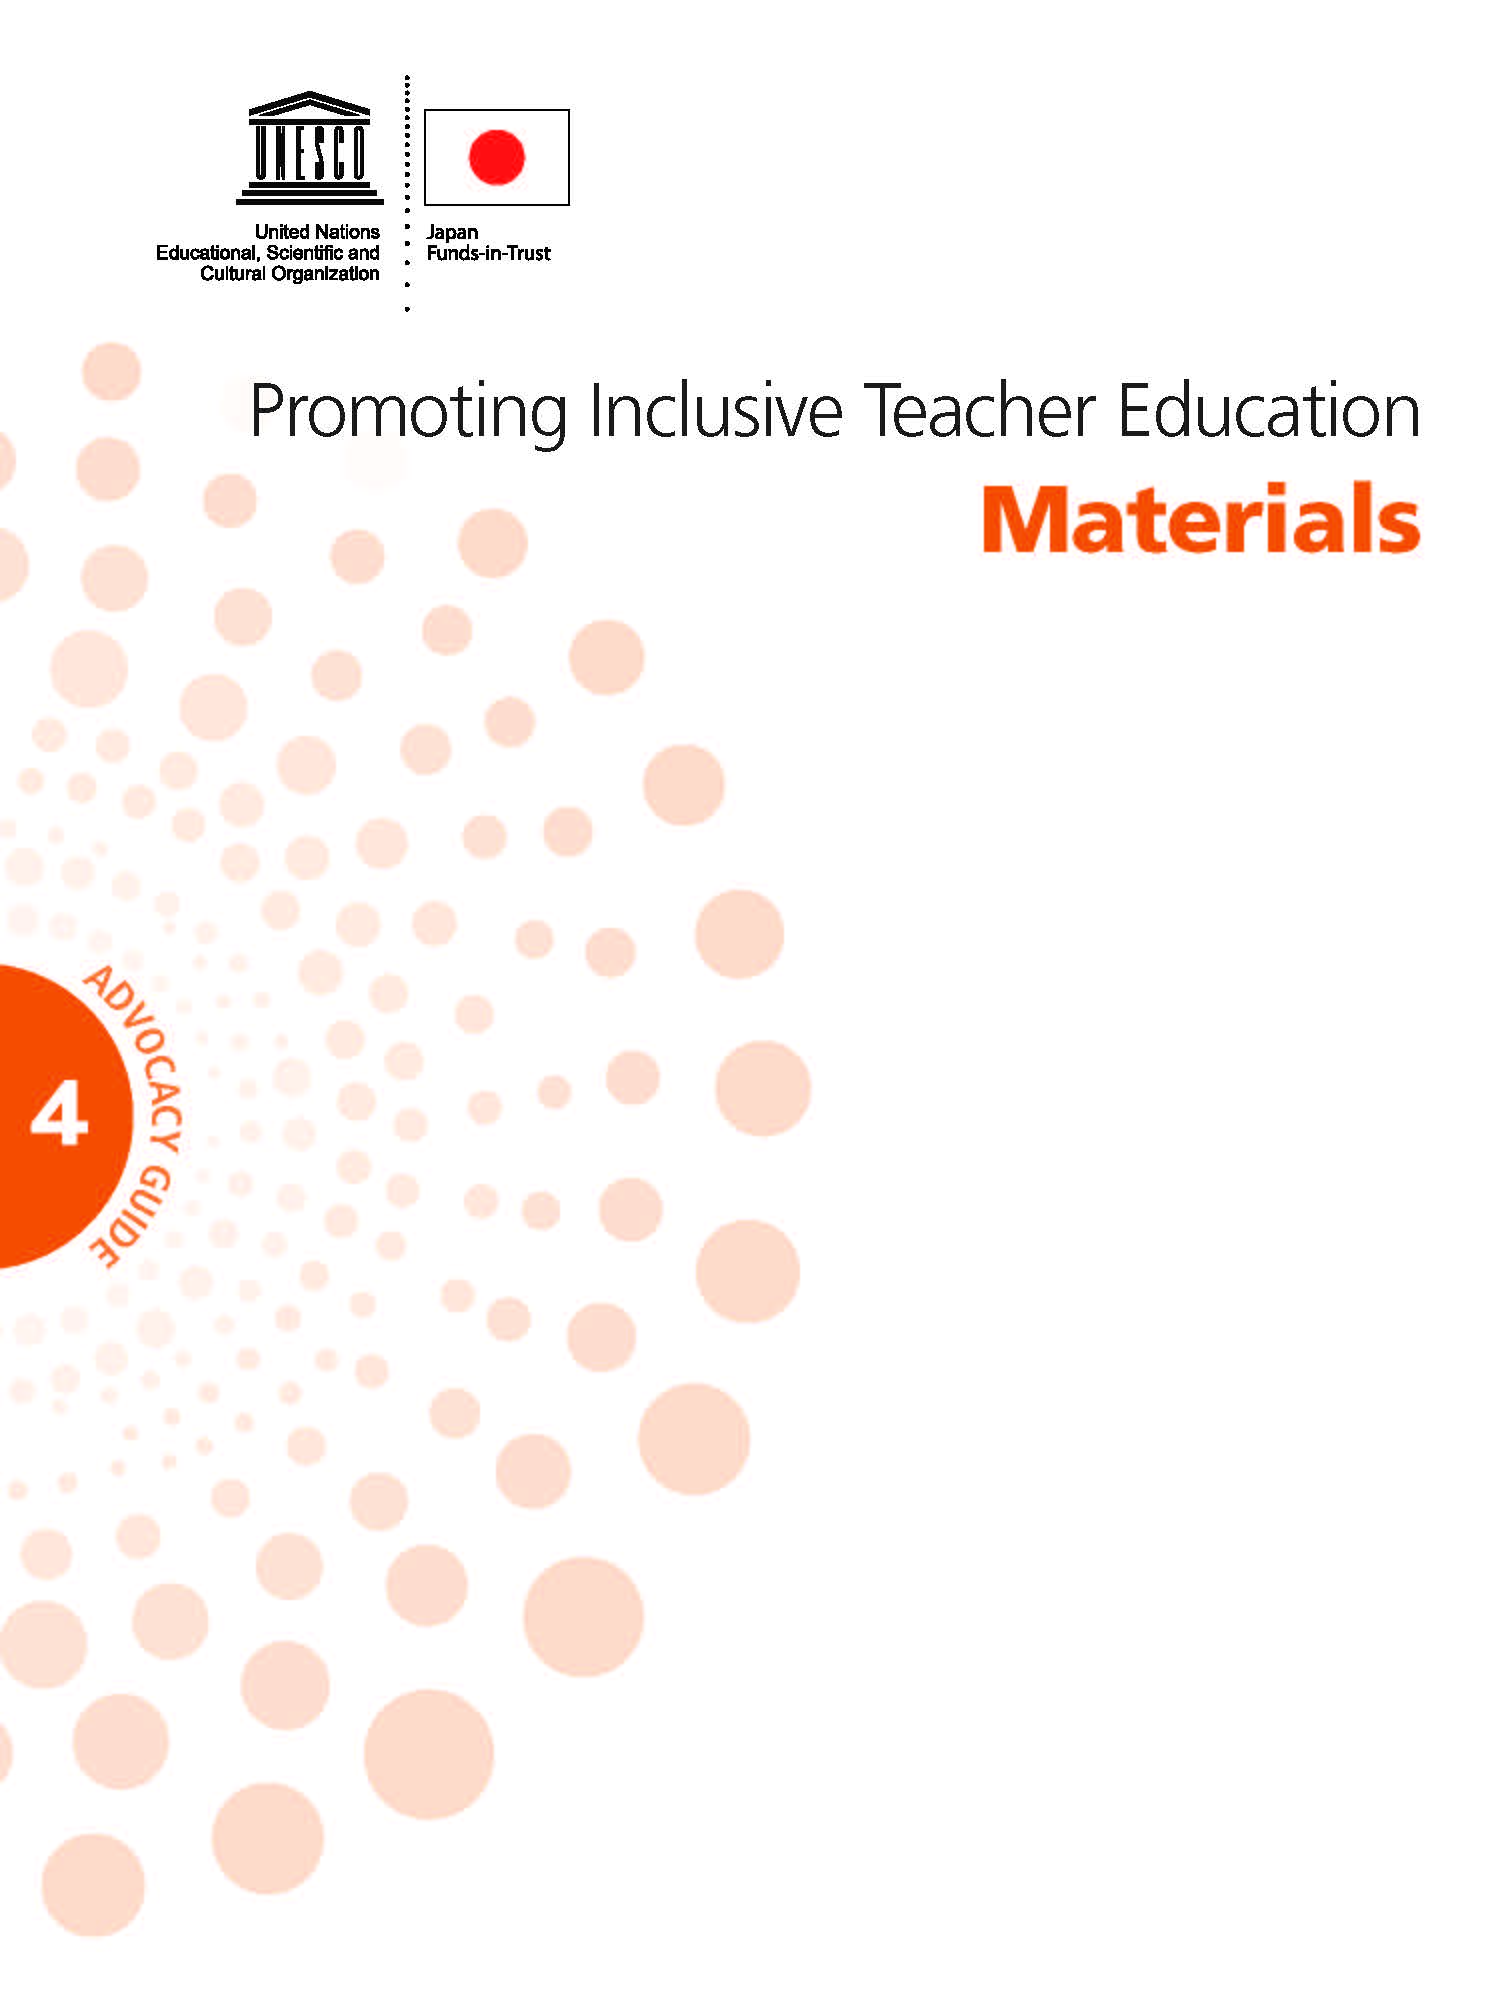 Promoting Inclusive Teacher Education Materials